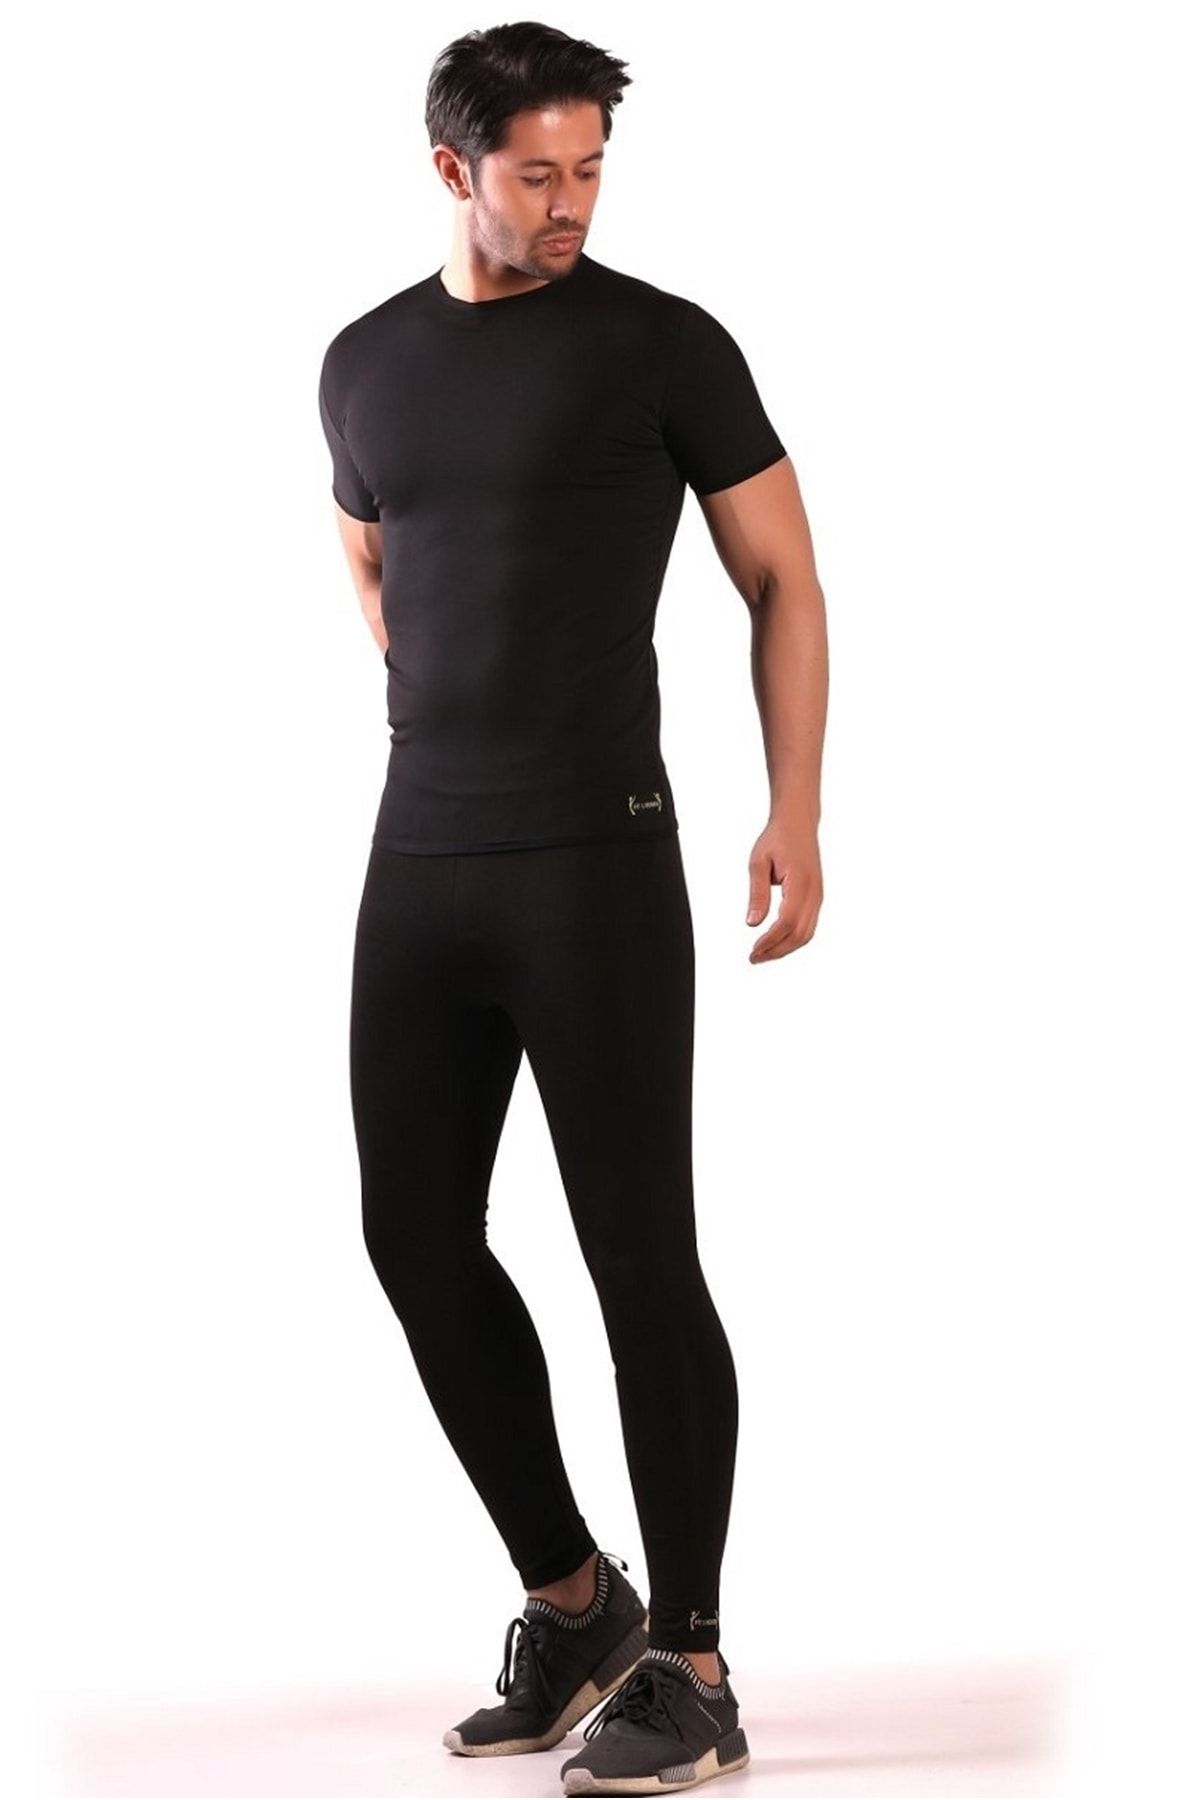 lovebox Erkek Siyah Spor Termal Giyim & İçlik